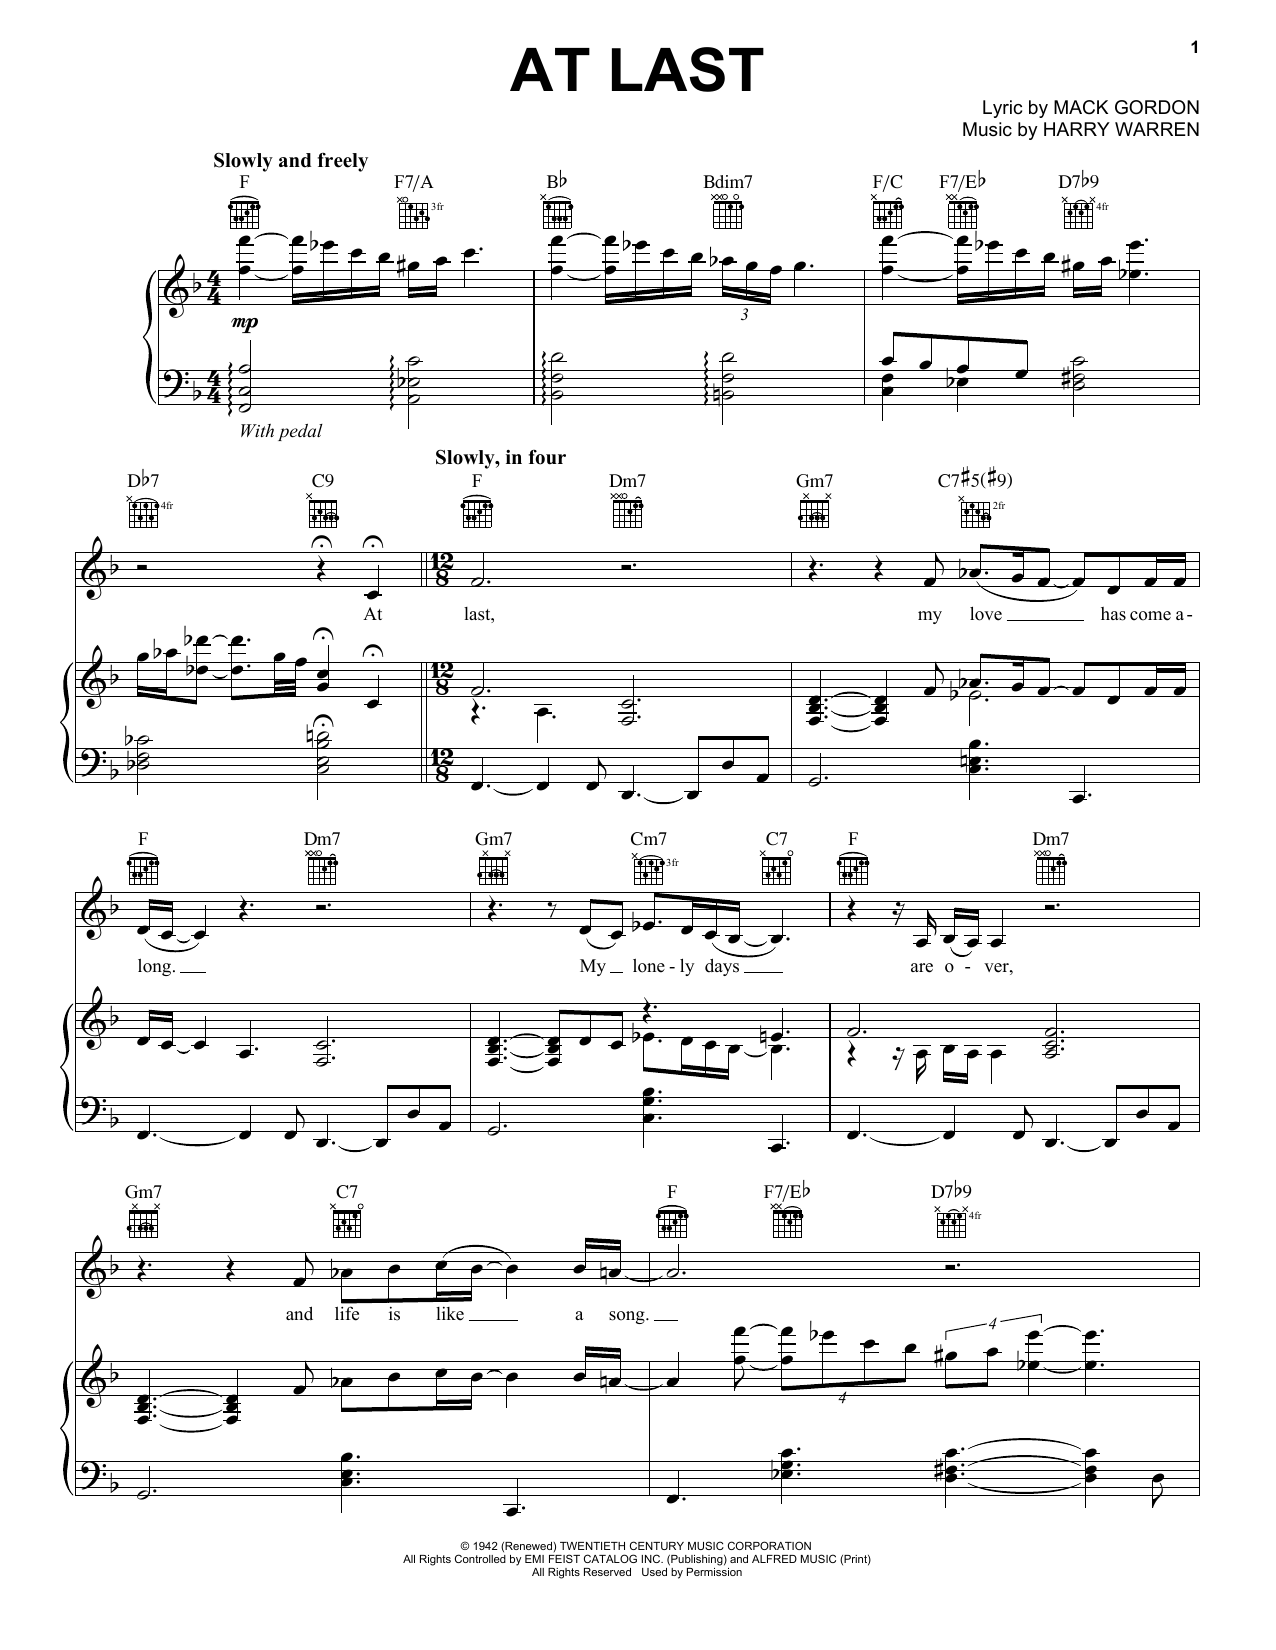 Etta James At Last Sheet Music Notes & Chords for Ukulele - Download or Print PDF